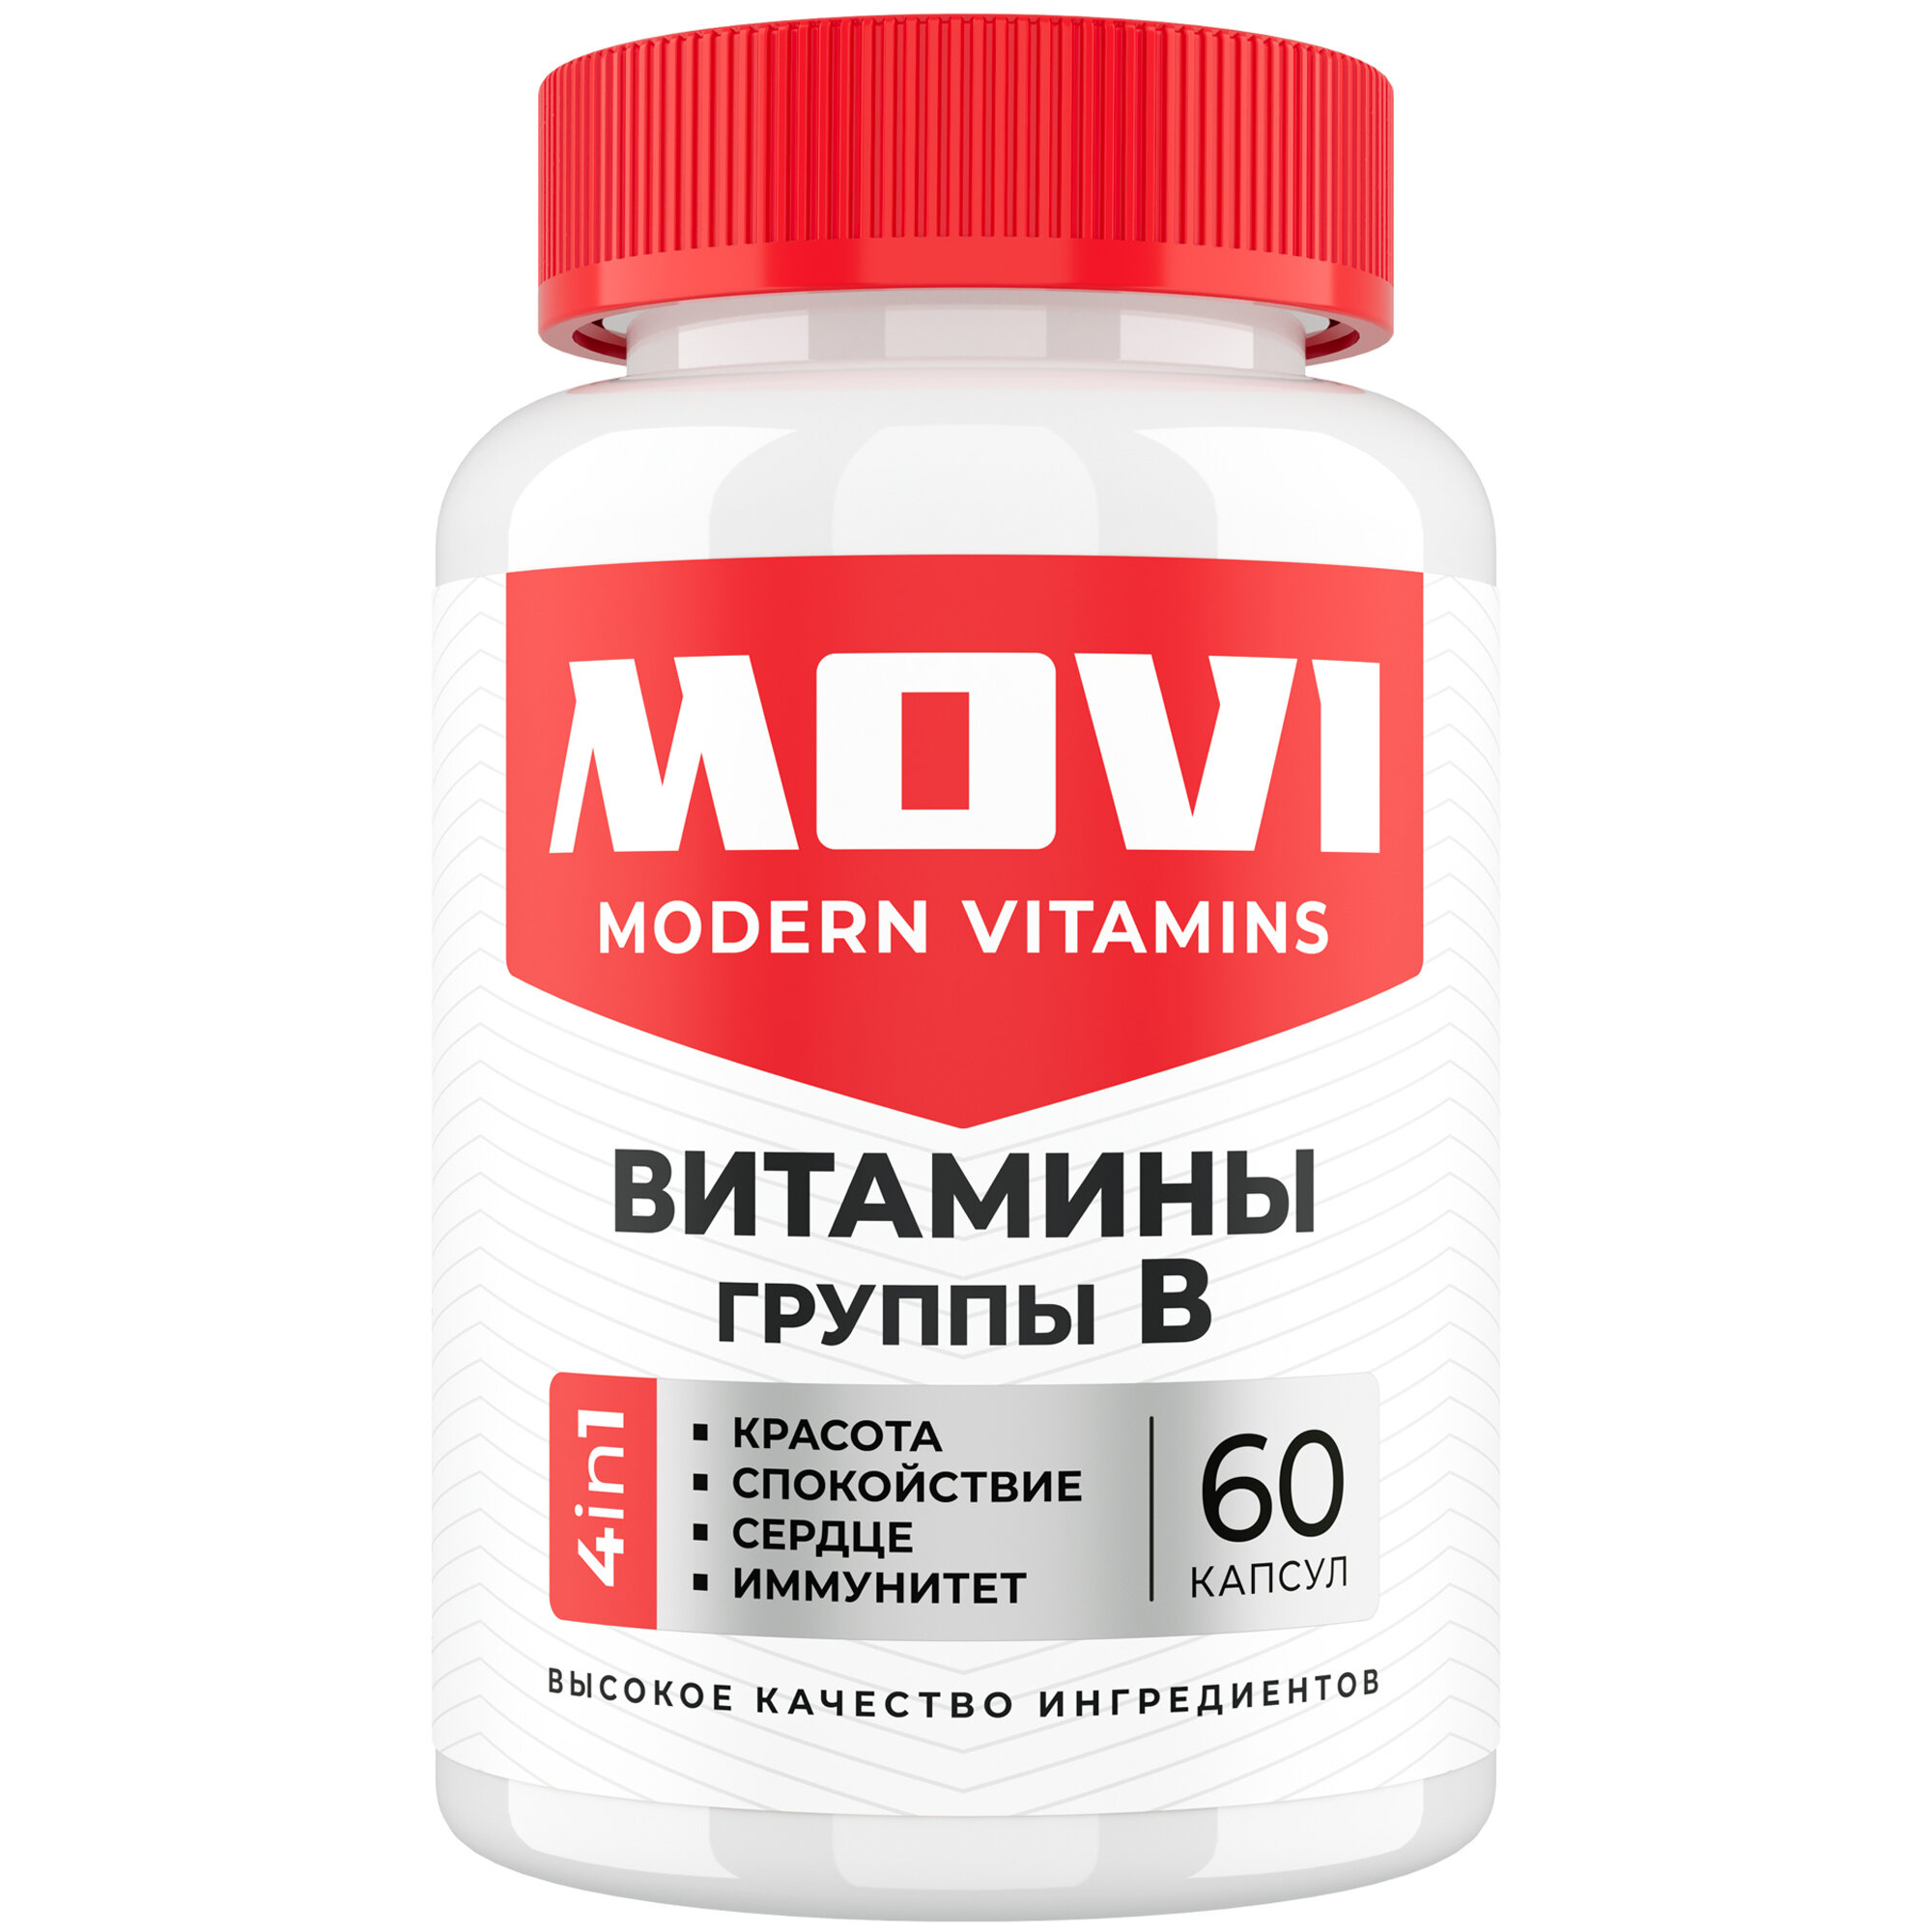 MOVI Vitamin B complex Витамин Б комплекс витаминов группы в 60 капсул